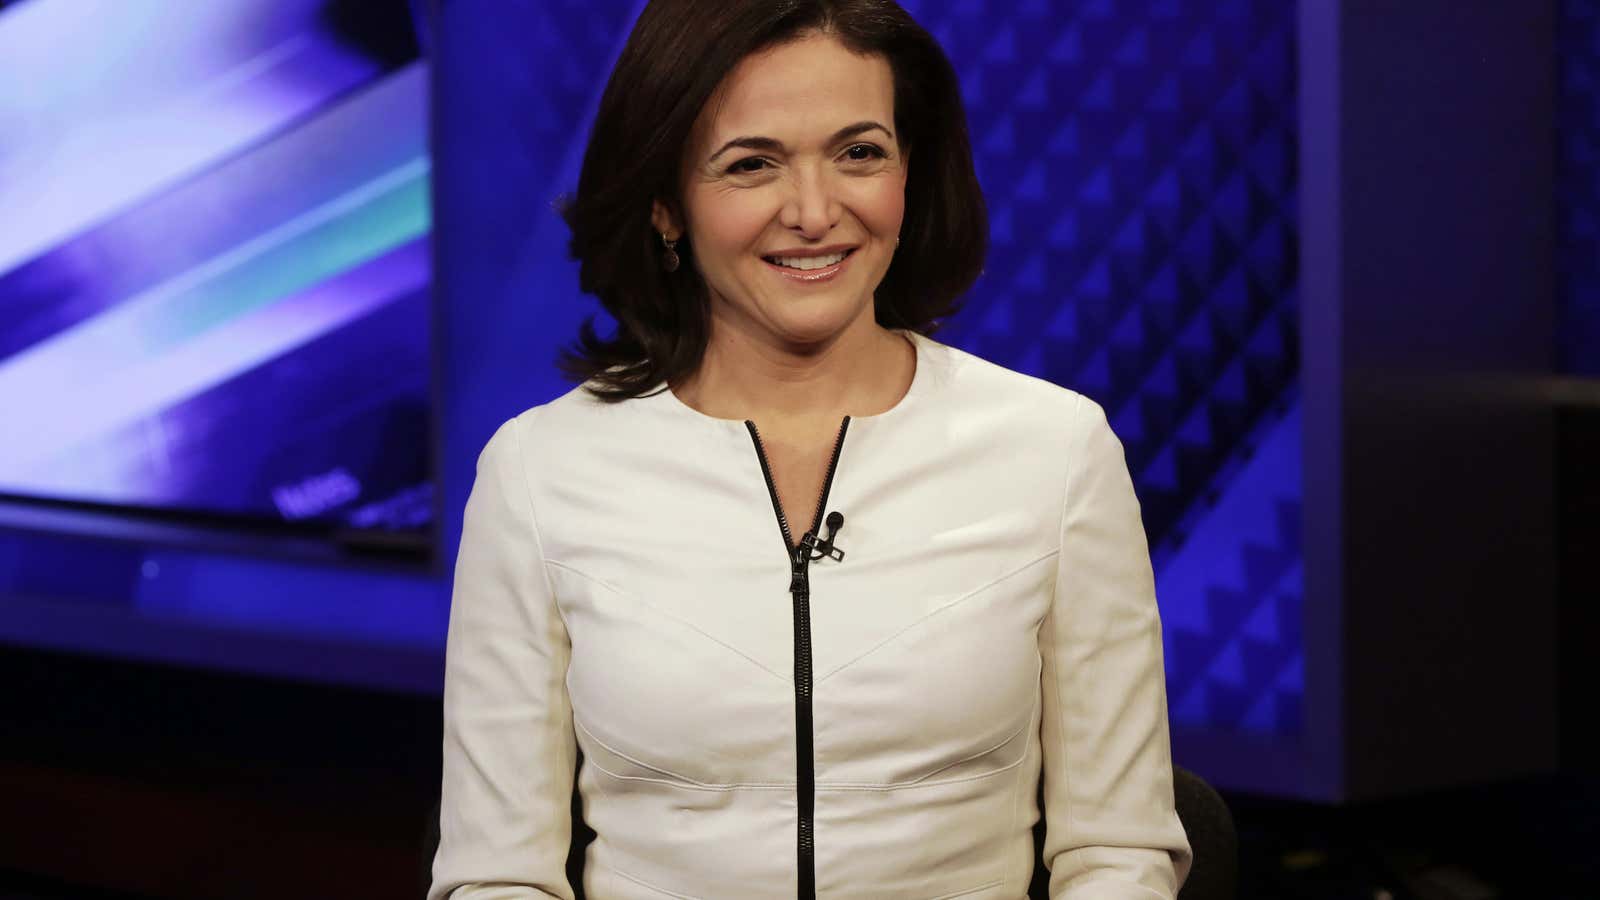 Facebook COO Sheryl Sandberg serves on the boards of Facebook, SurveyMonkey, and Disney.